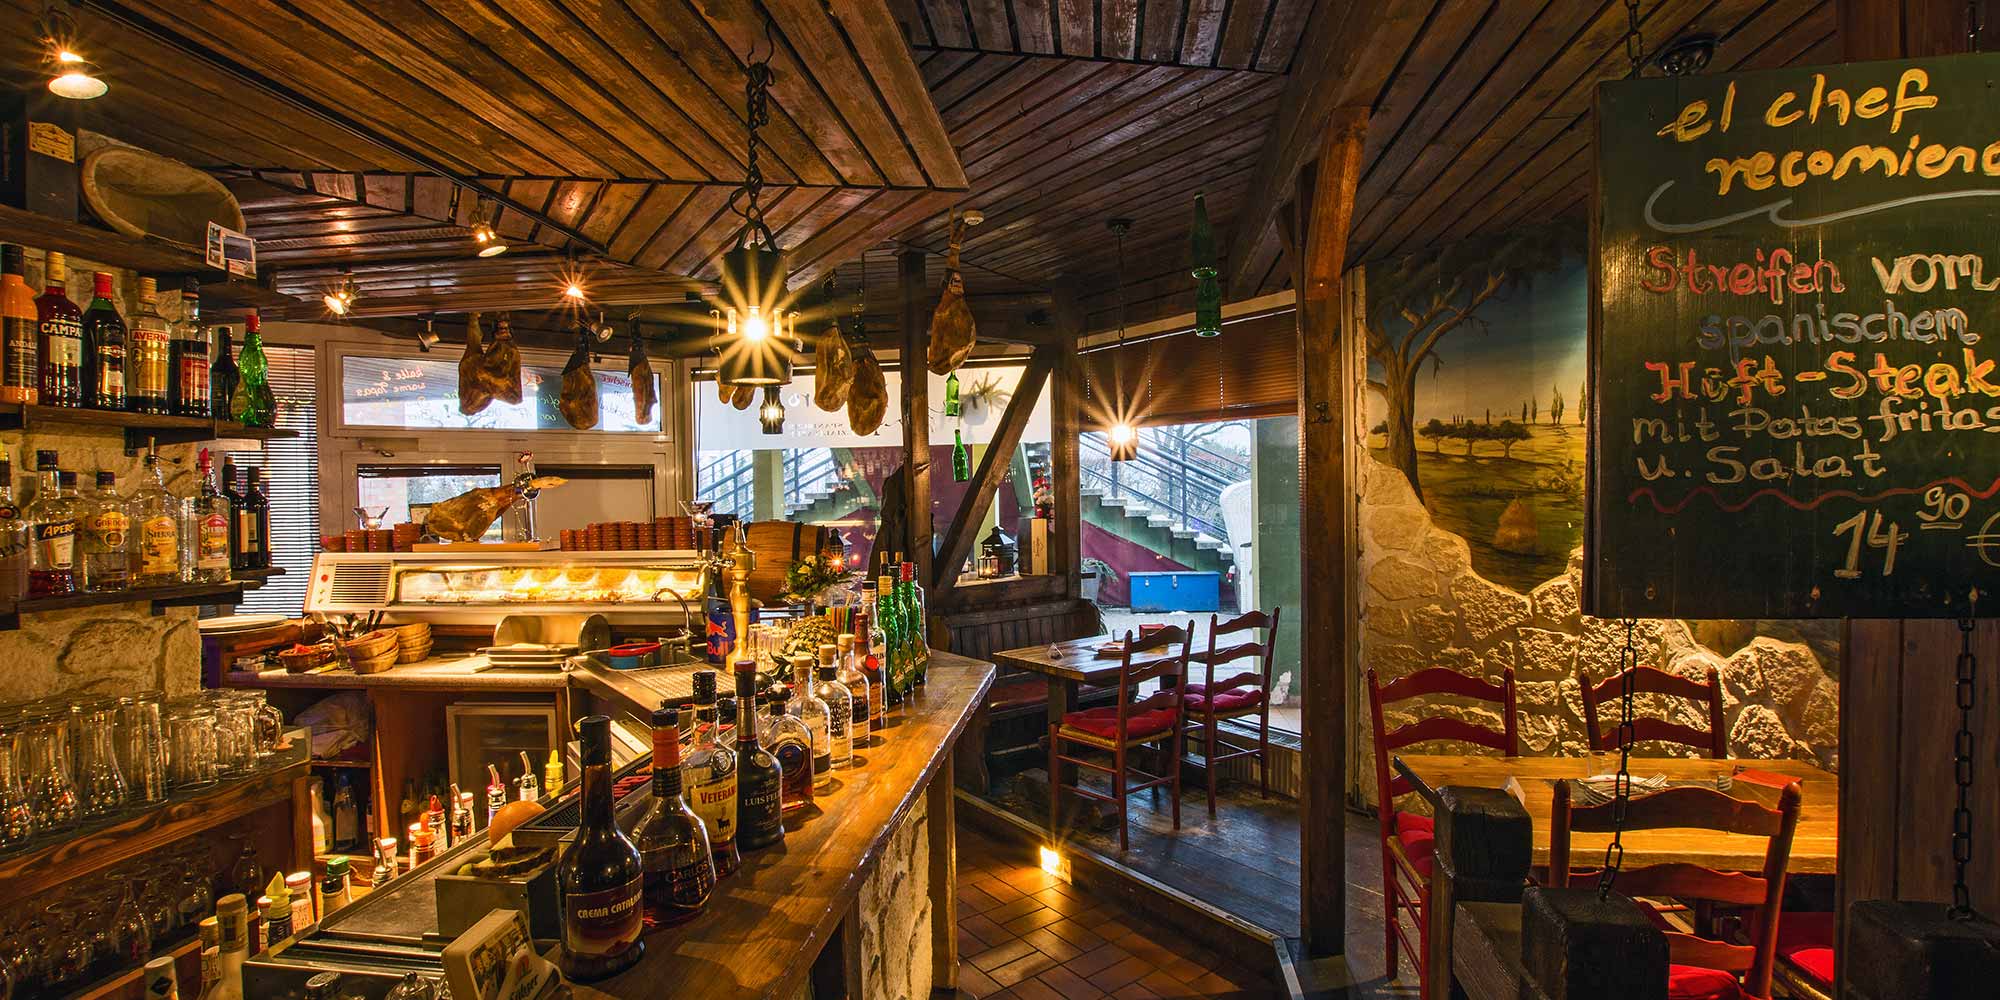 El Toro, Ihr Restaurant und Tapas Bar in Seebad Heringsdorf